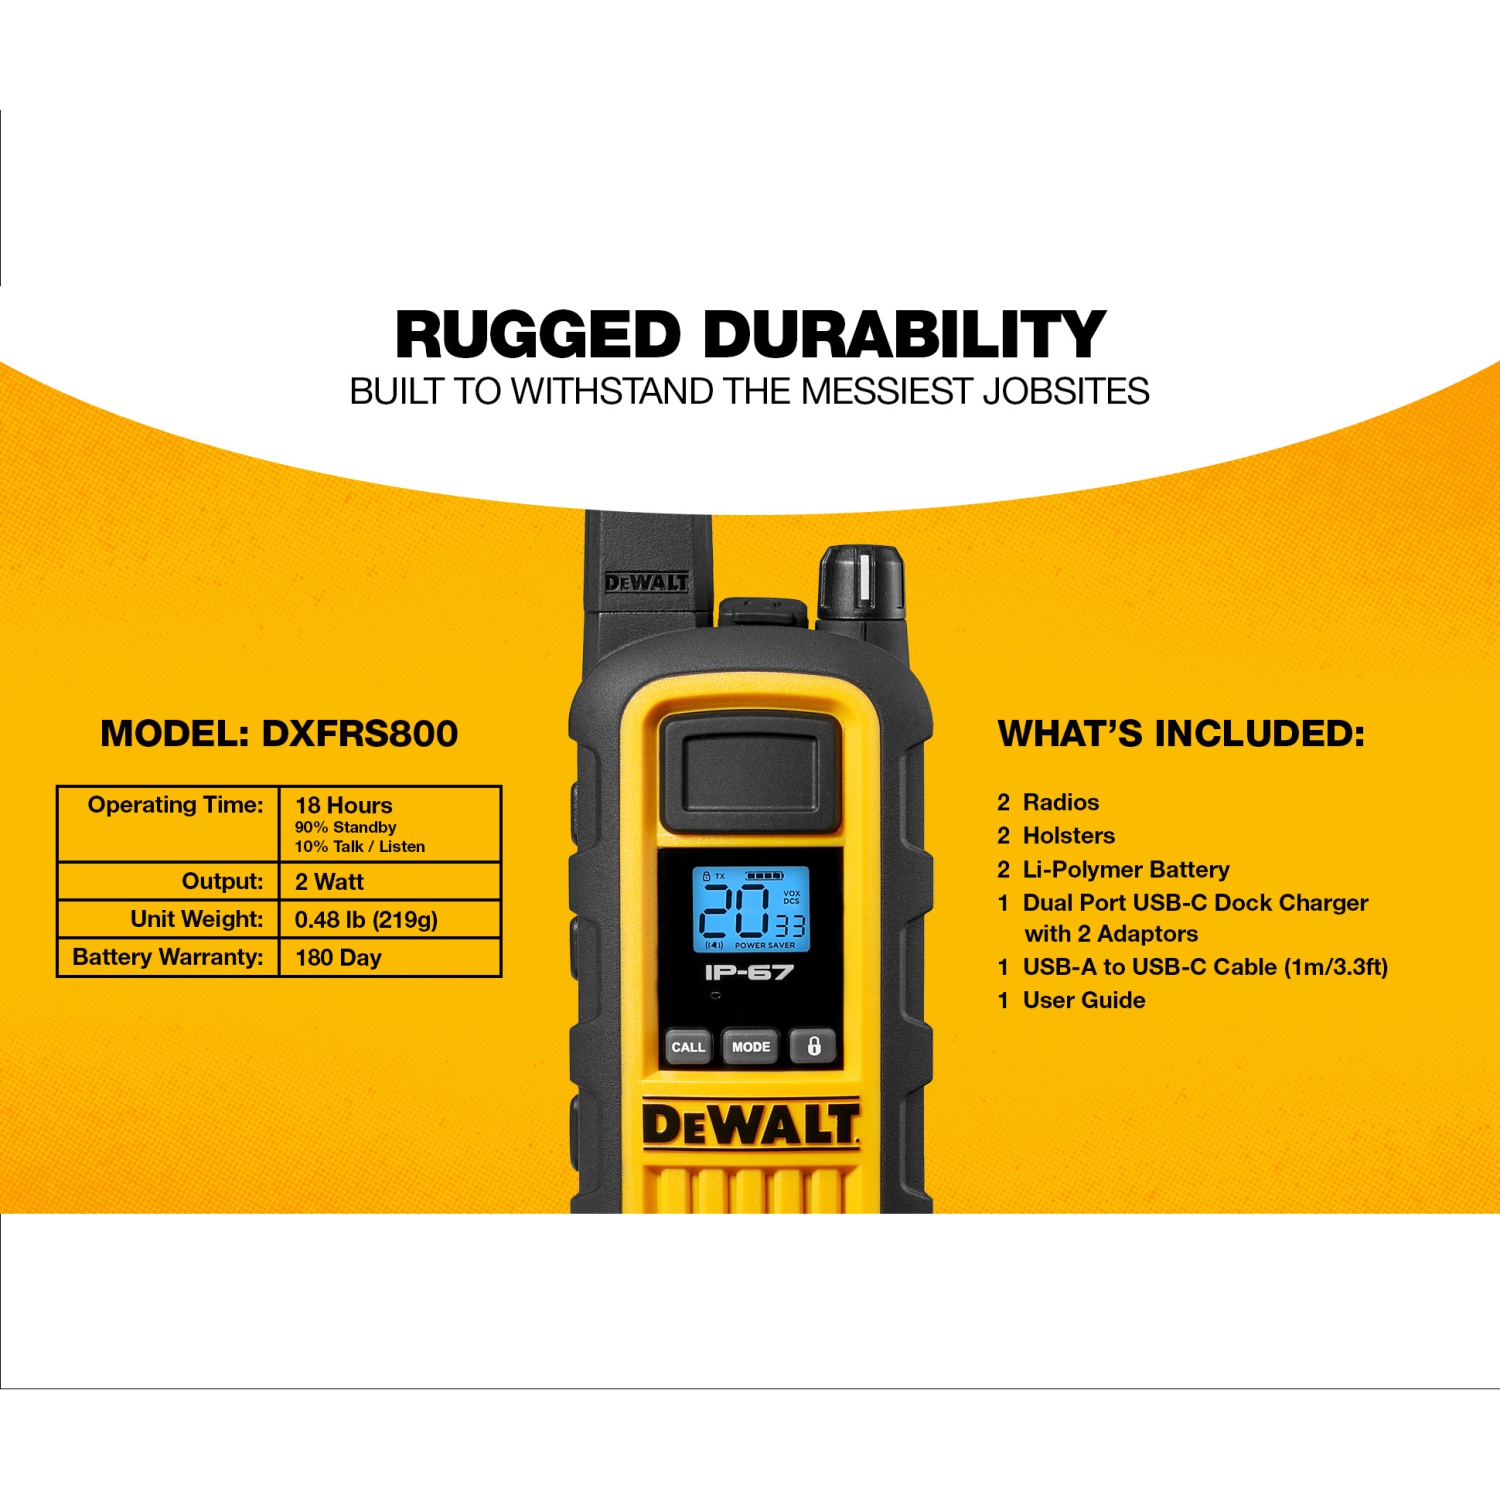 DEWALT DXFRS300 Bundle 1W Walkie Talkies Heavy Duty Business Two-Way Radios, Pack with Headsets (1DXFRS300-SV1) - 1